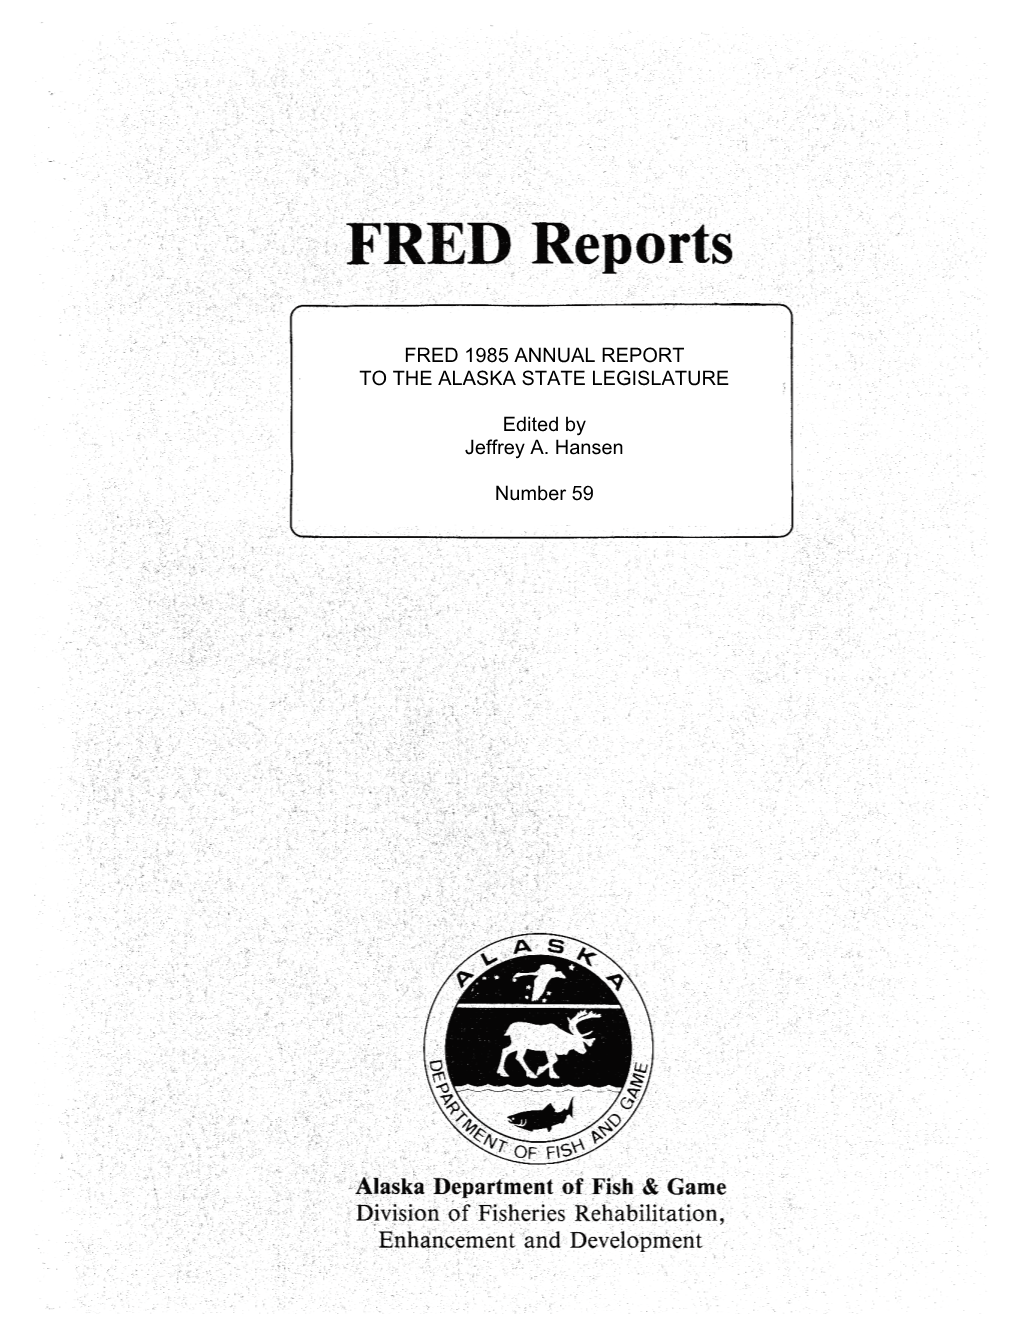 Fred 1985 Annual Report to the Alaska State Legislature